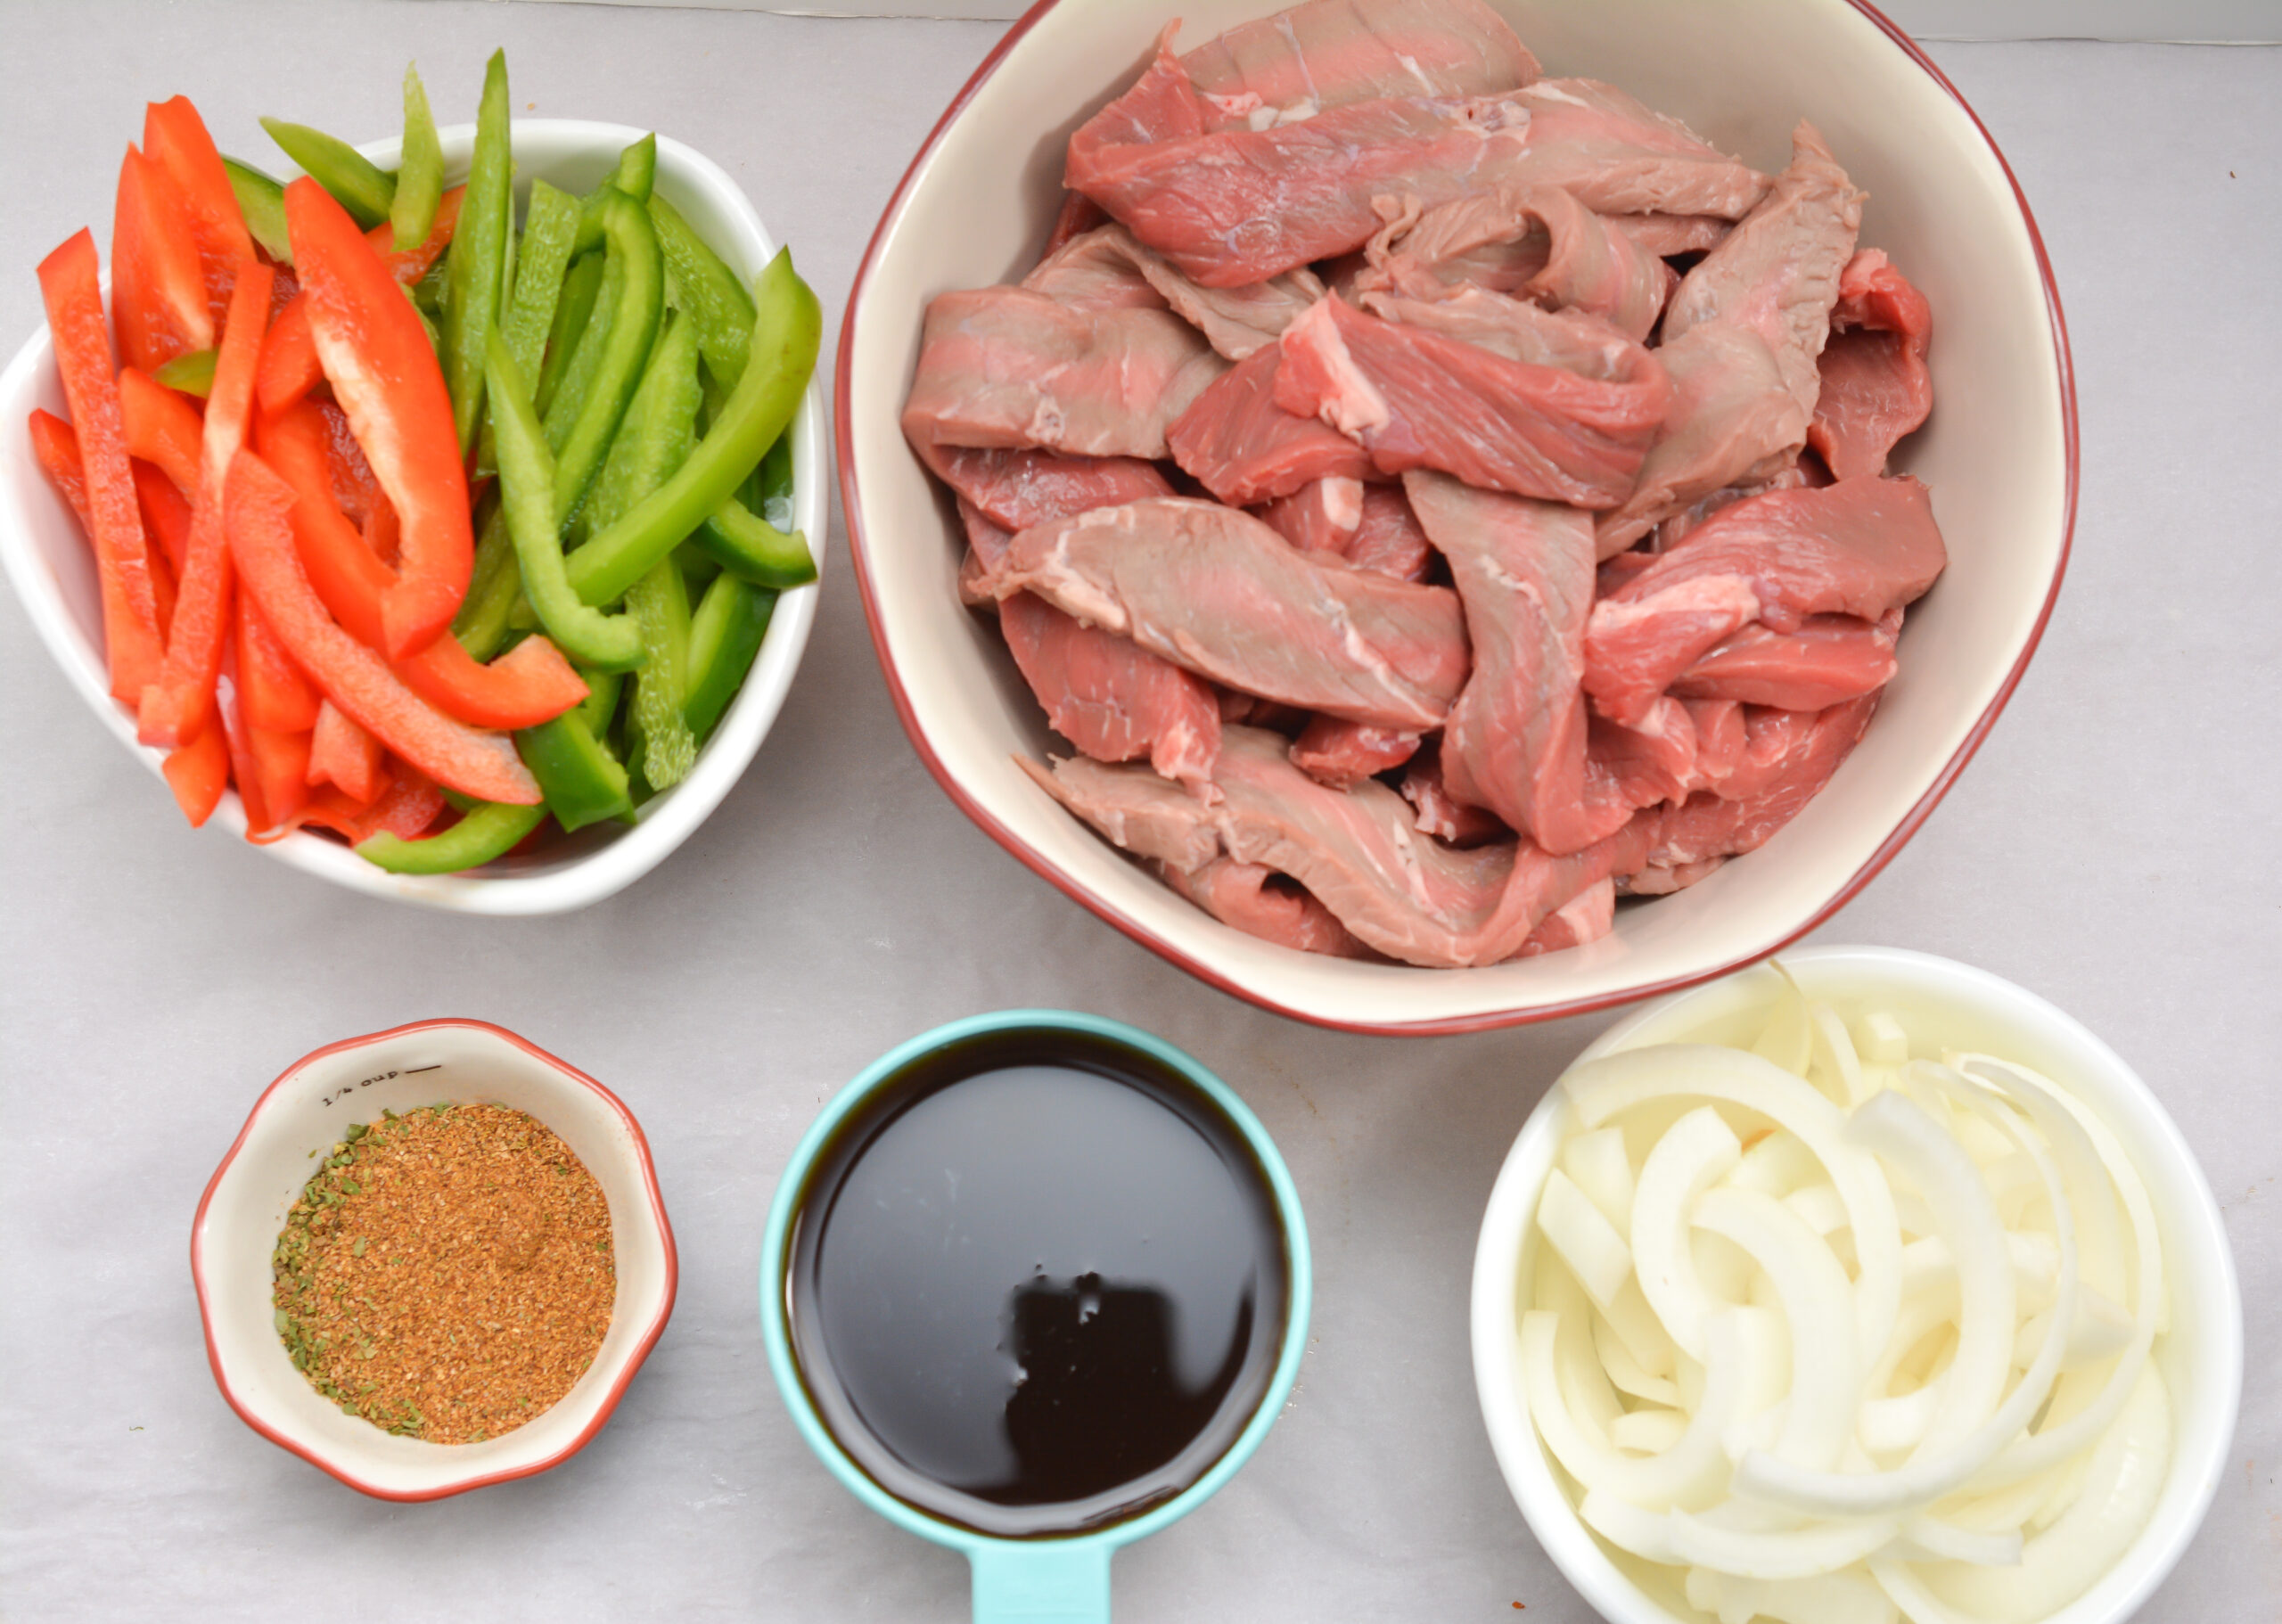 Ingredients for steak fajitas in individual bowls.